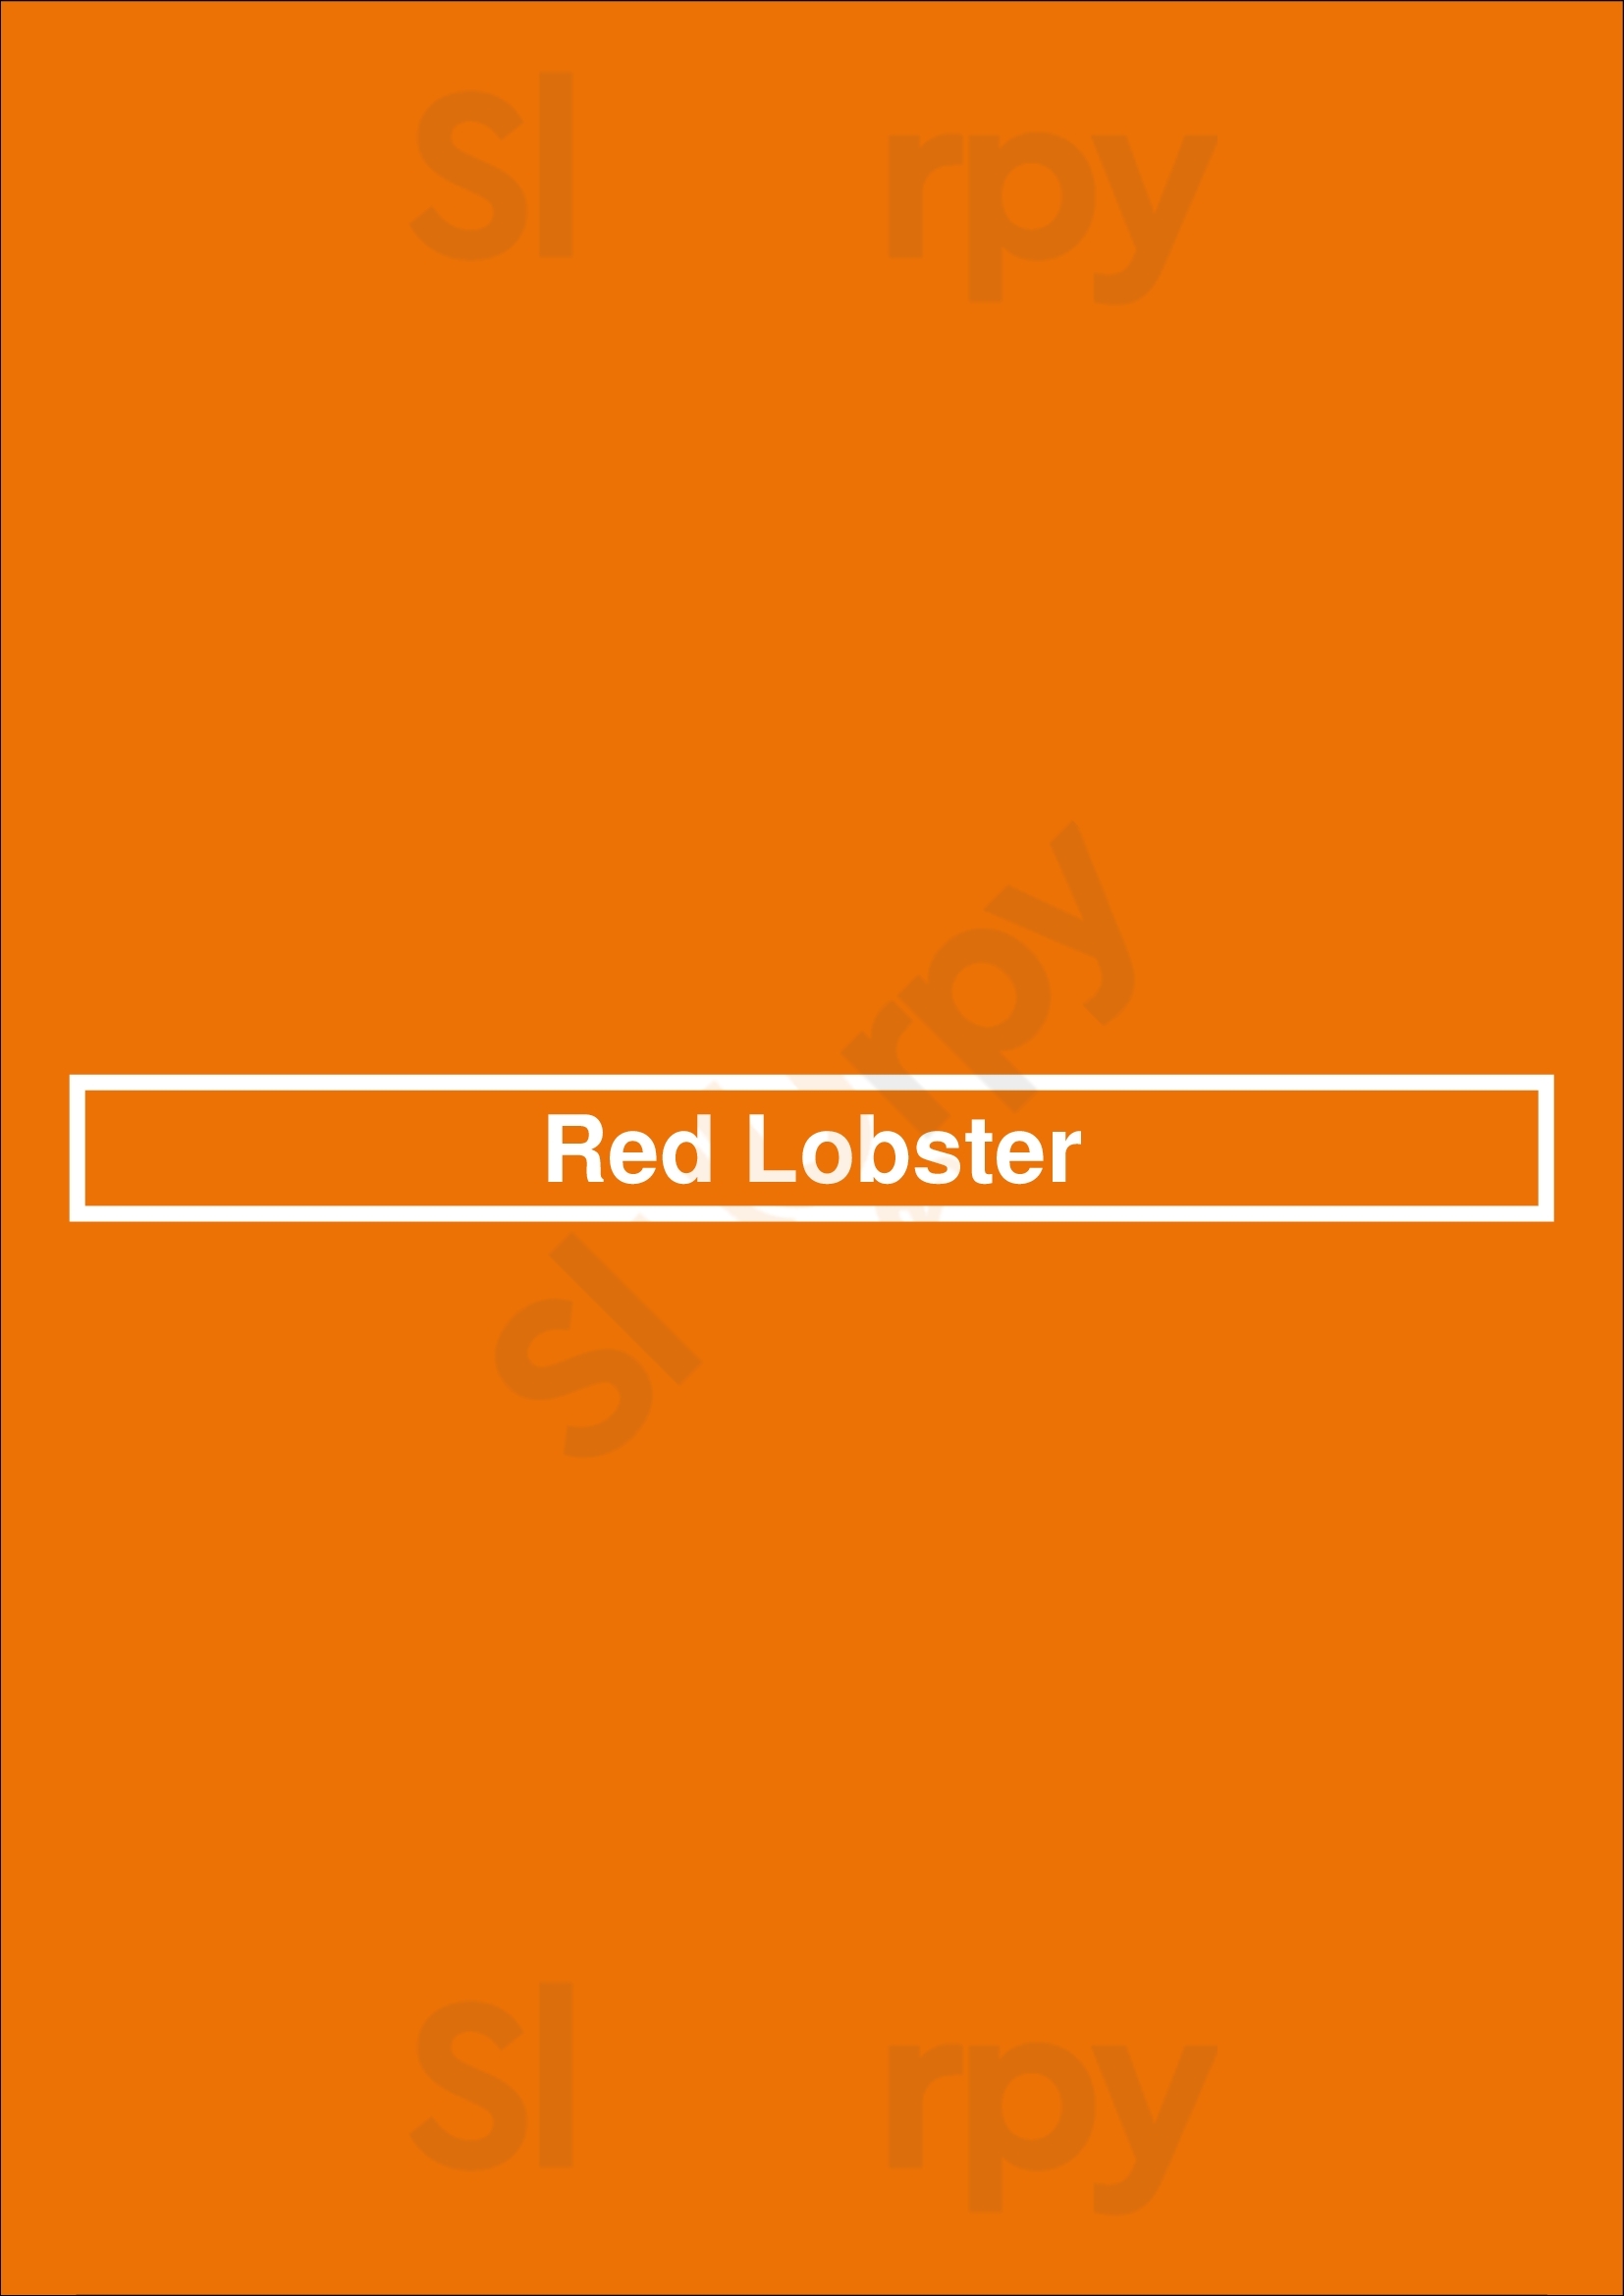 Red Lobster Buffalo Menu - 1